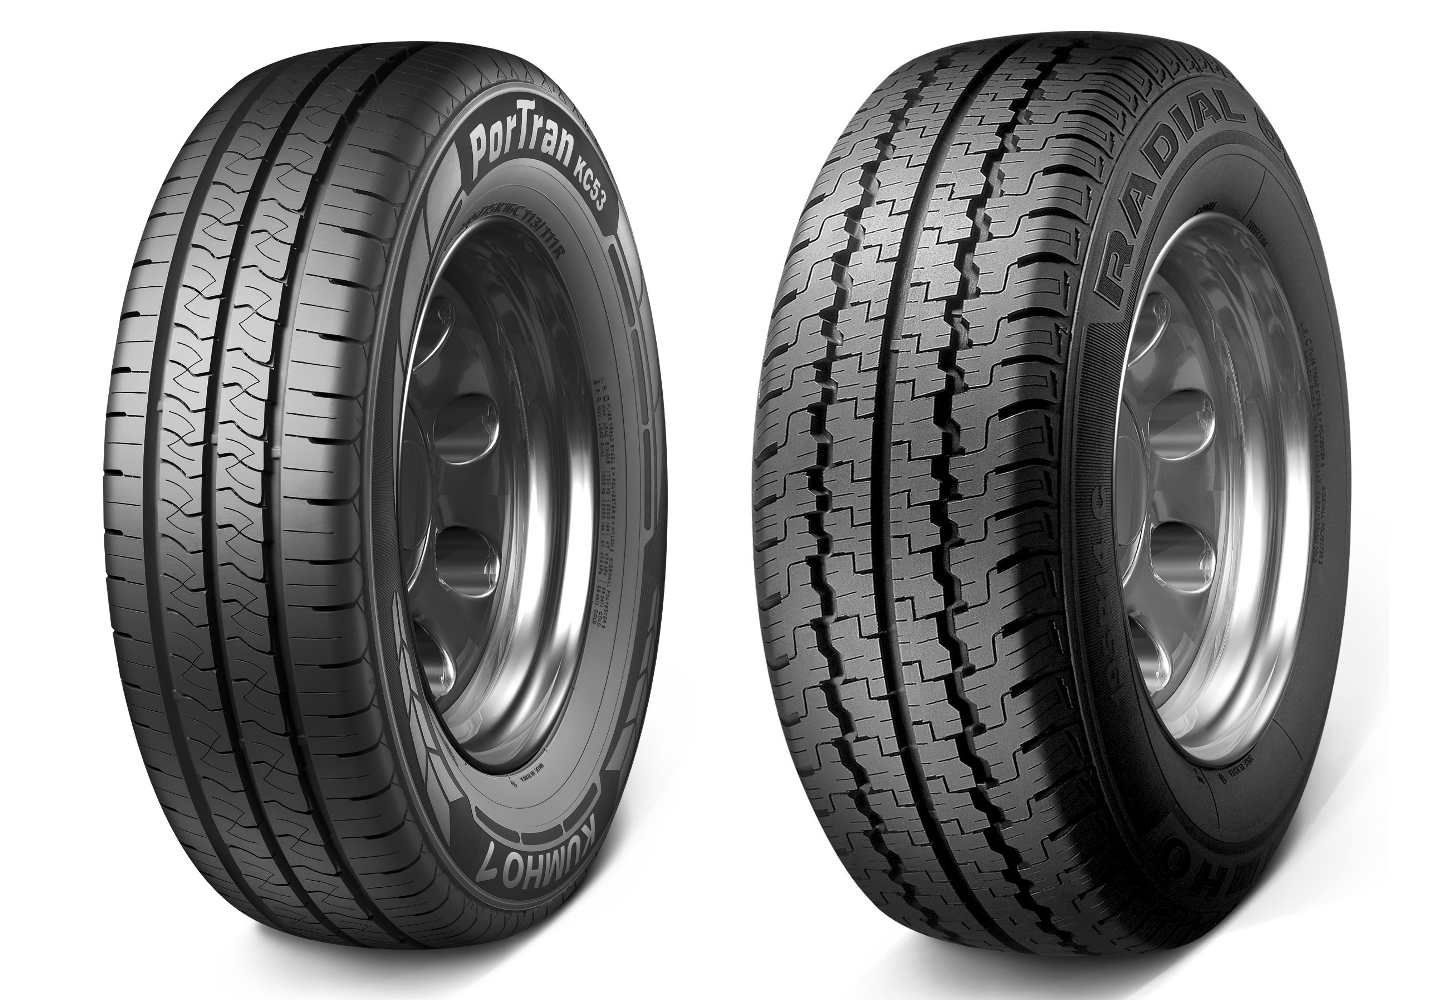 to Tyrepress - 15-16” Portran New KC53 in Radial Kumho tyre replace sizes 857 van